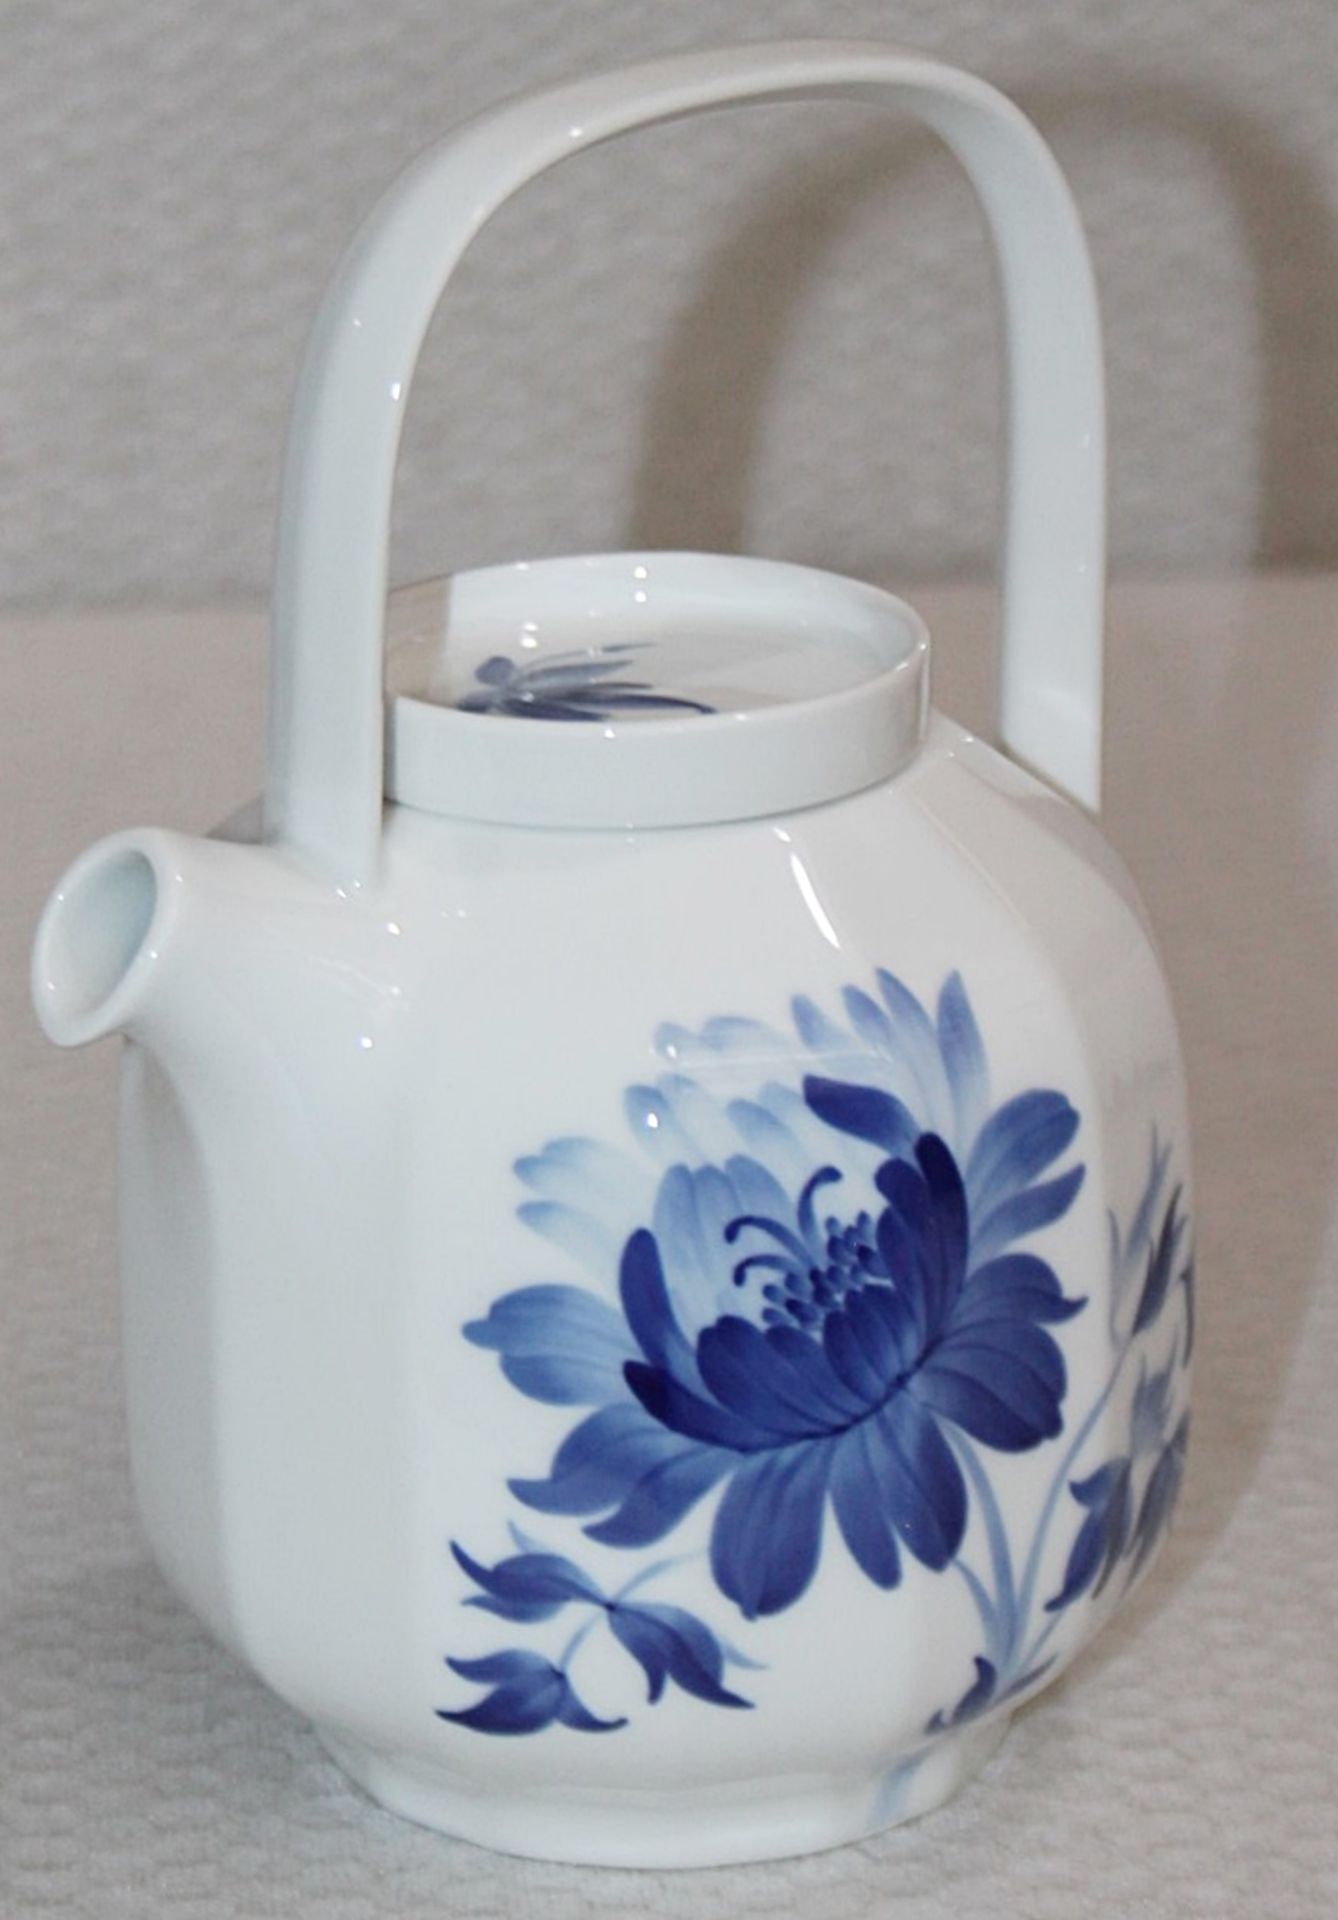 1 x ROYAL COPENHAGEN 'Blomst' Peony Tree Handcrafted Porcelain Teapot - Original Price £125.00 - Image 3 of 11